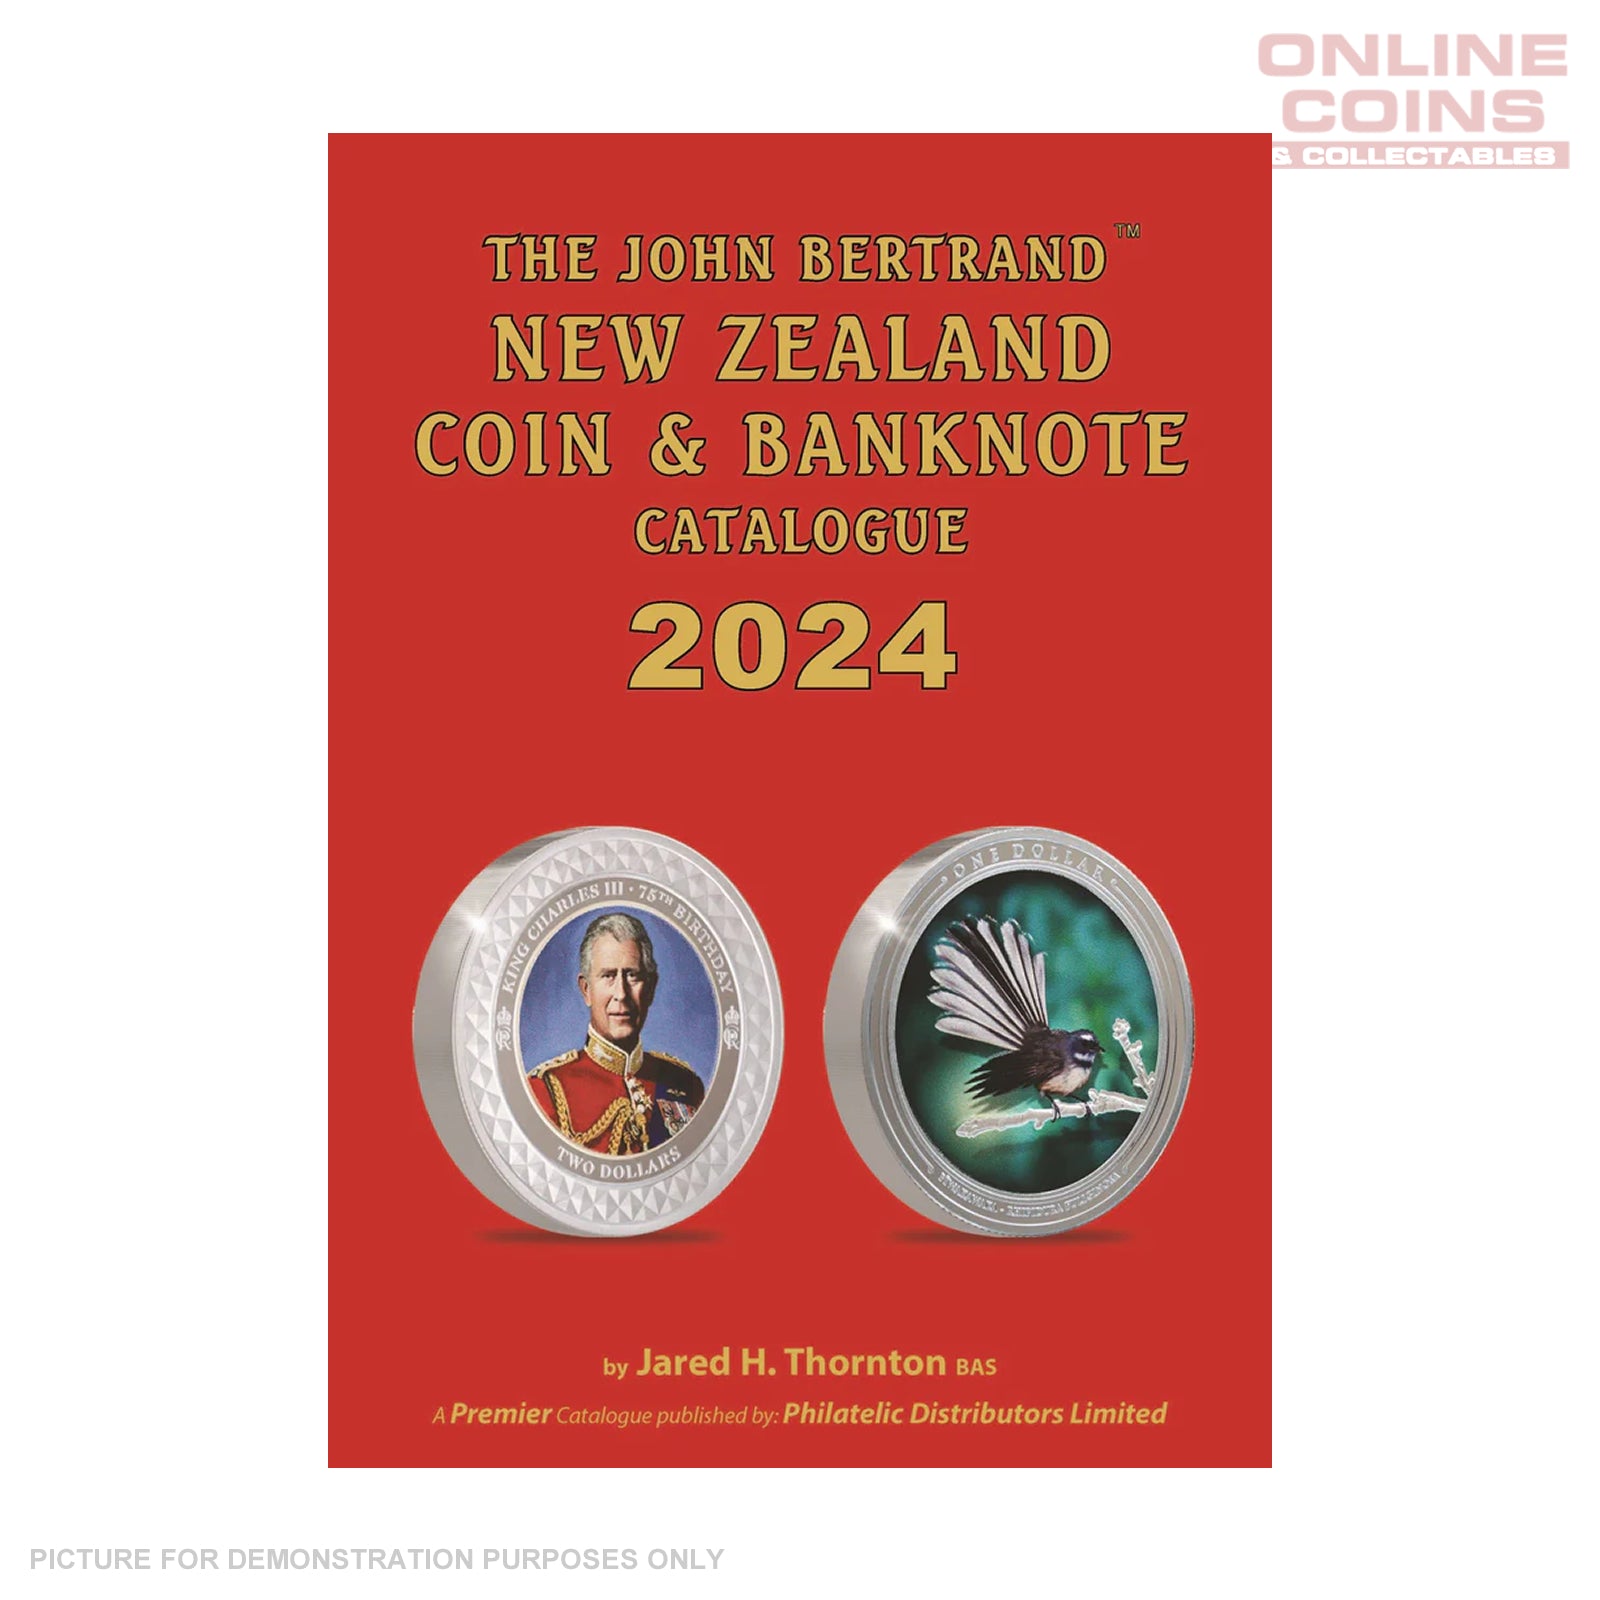 The John Bertrand New Zealand Coin and Banknote Catalogue 2024